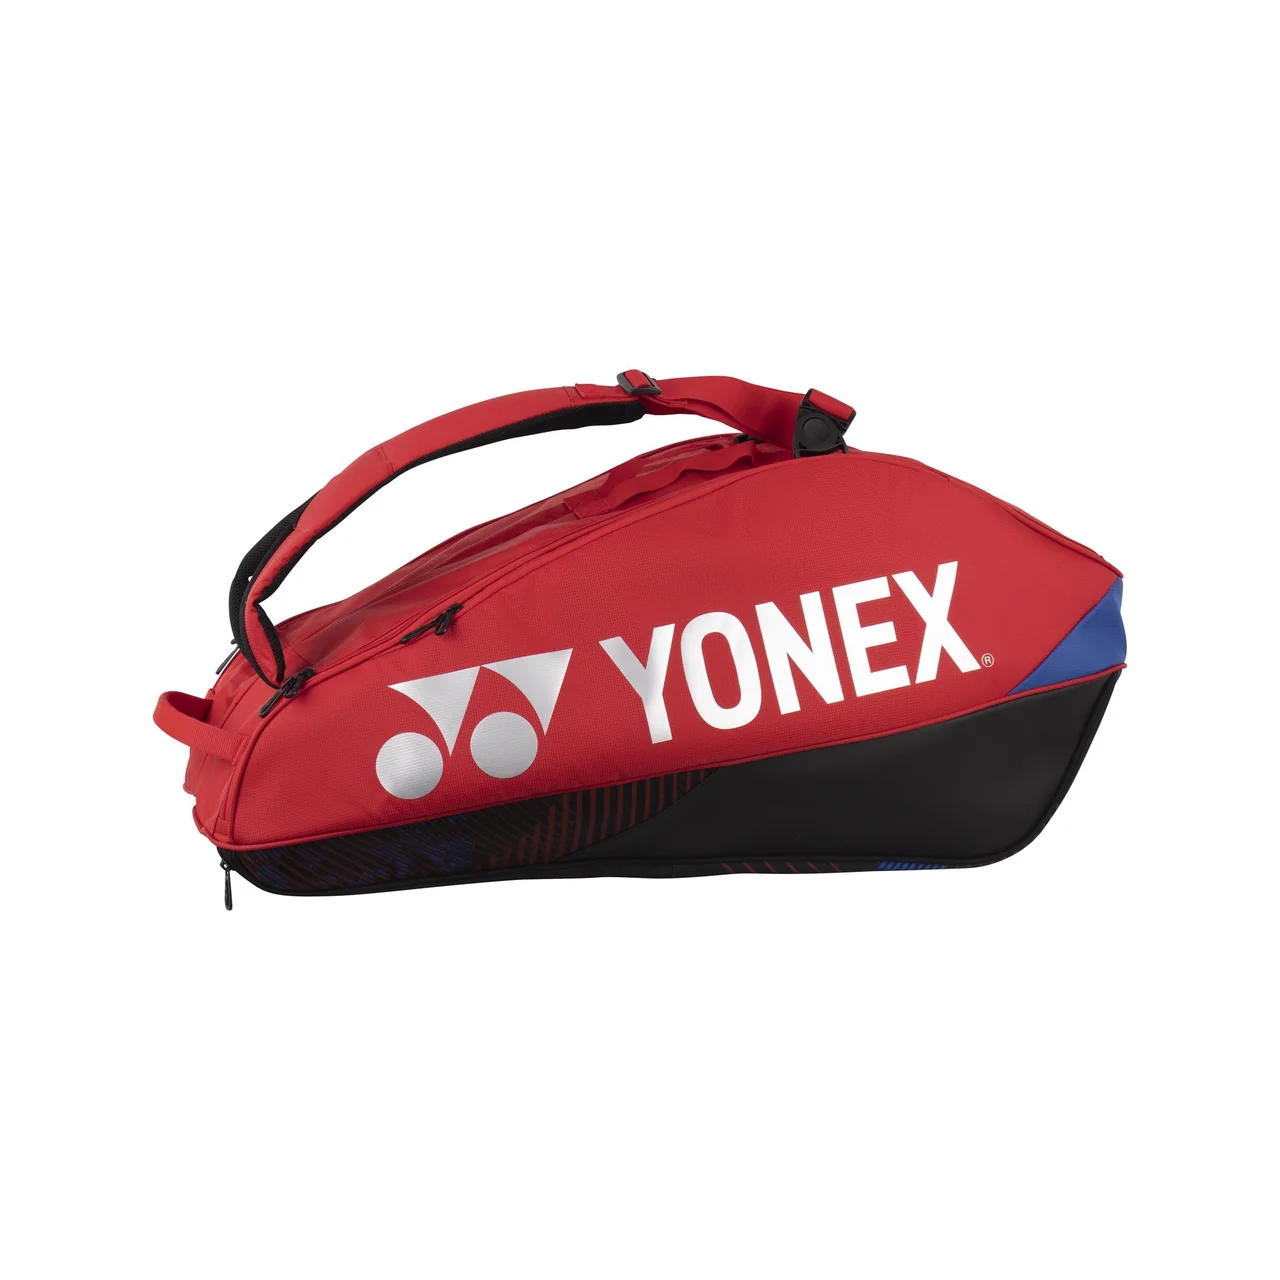 Yonex Pro Racket Bag x6 Red